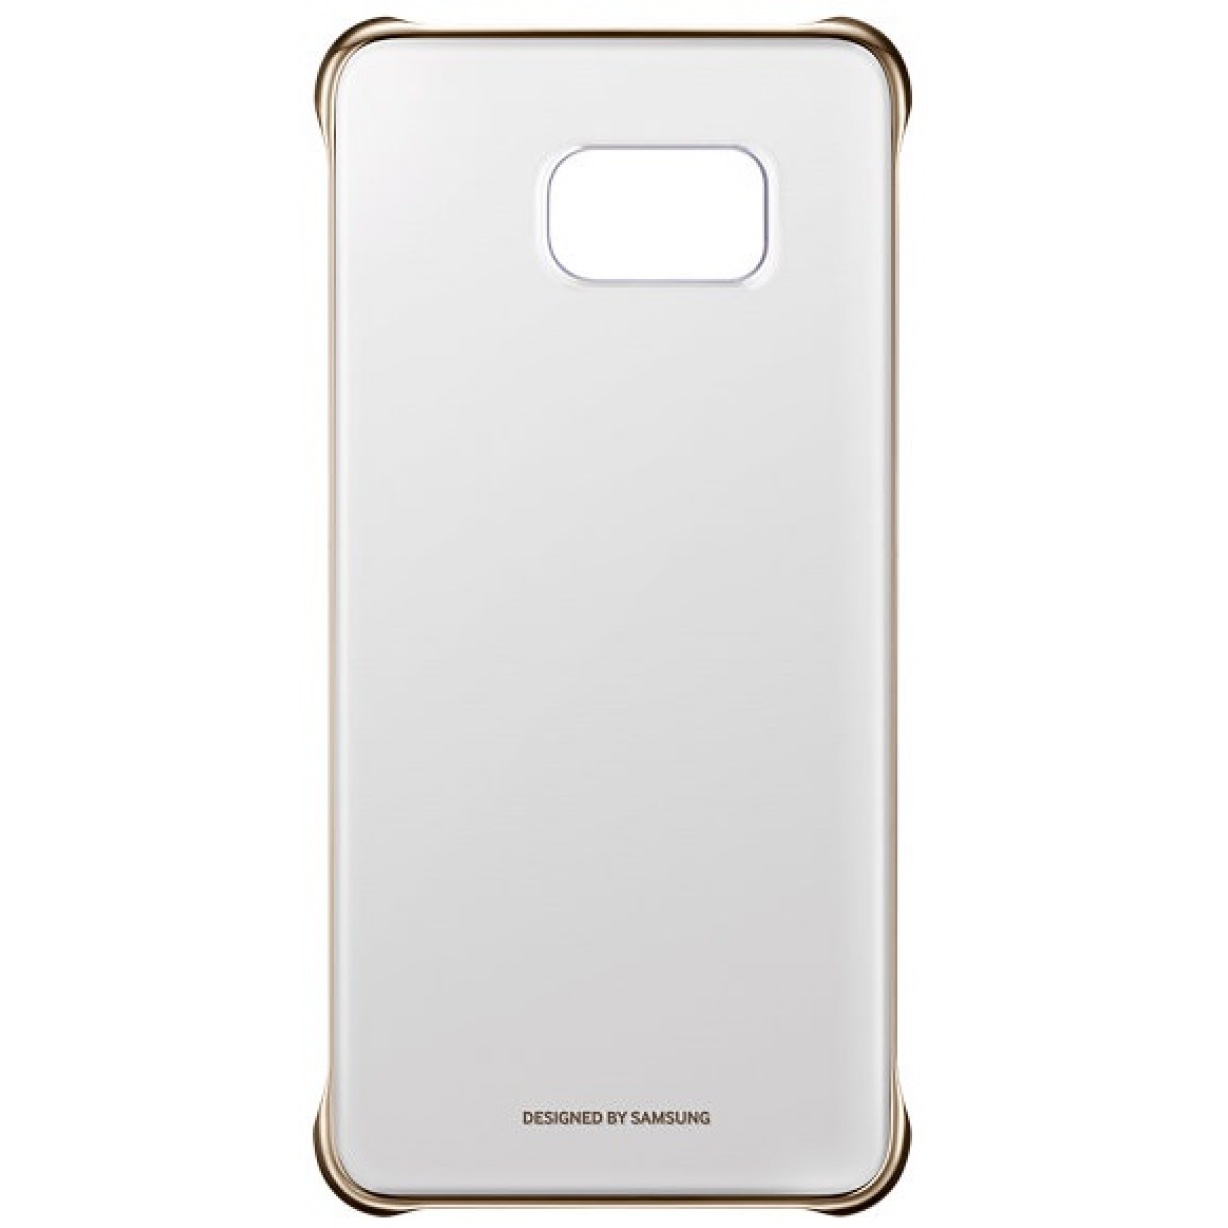 Nugarėlė G928F Samsung Galaxy S6 Edge+ Clear Cover Auksinė